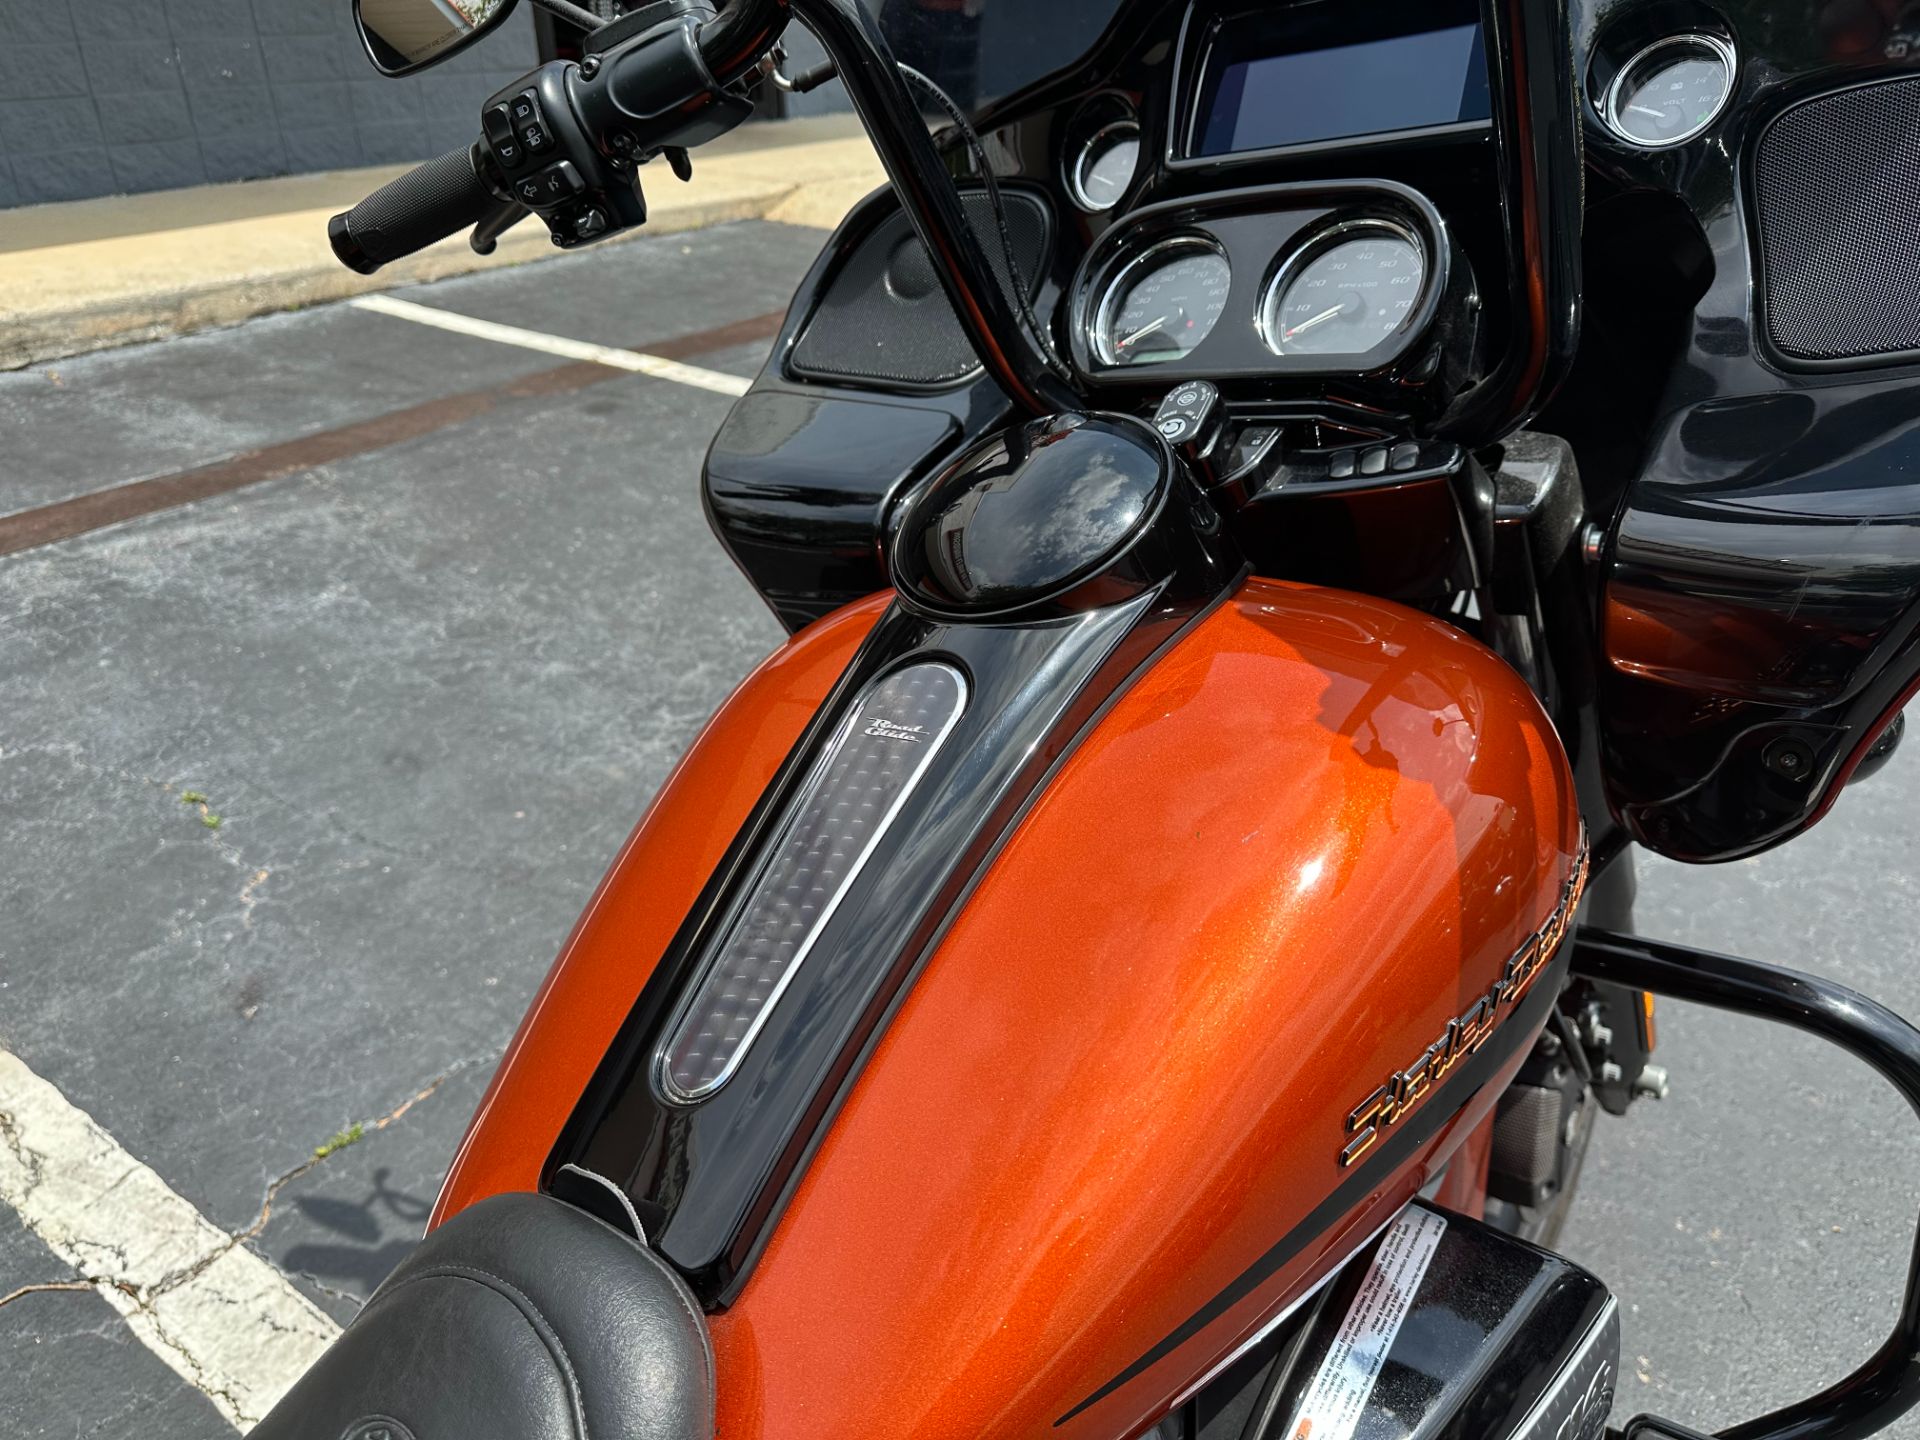 2019 Harley-Davidson Road Glide® Special in Mobile, Alabama - Photo 10